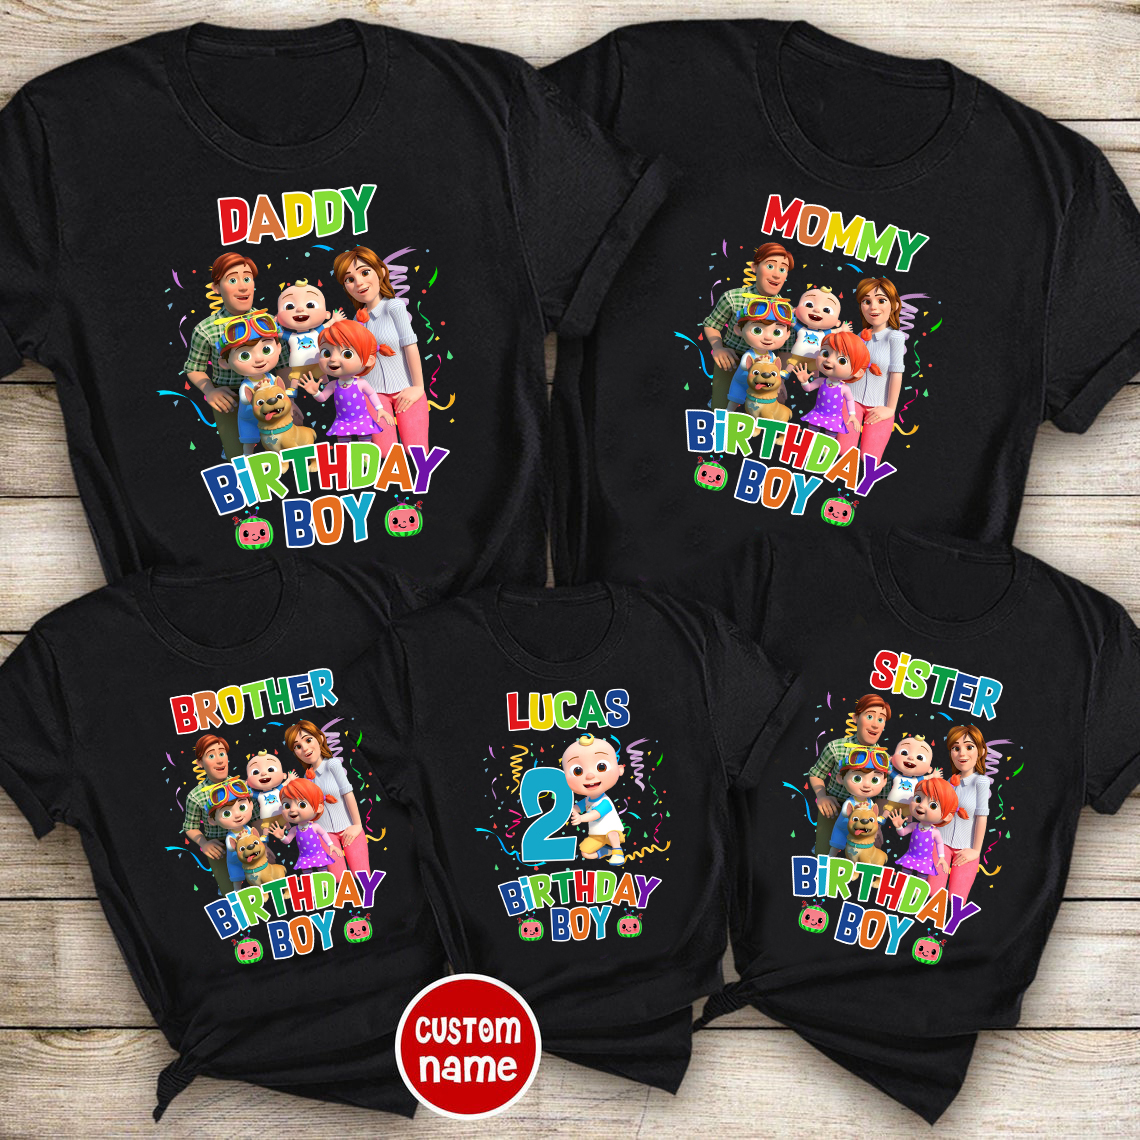 Cocomelon Birthday Personalized Shirt Sets, Cocomelon Family Shirt, Cocomelon Party Shirt, Cocomelon Birthday, Family Matching shirts